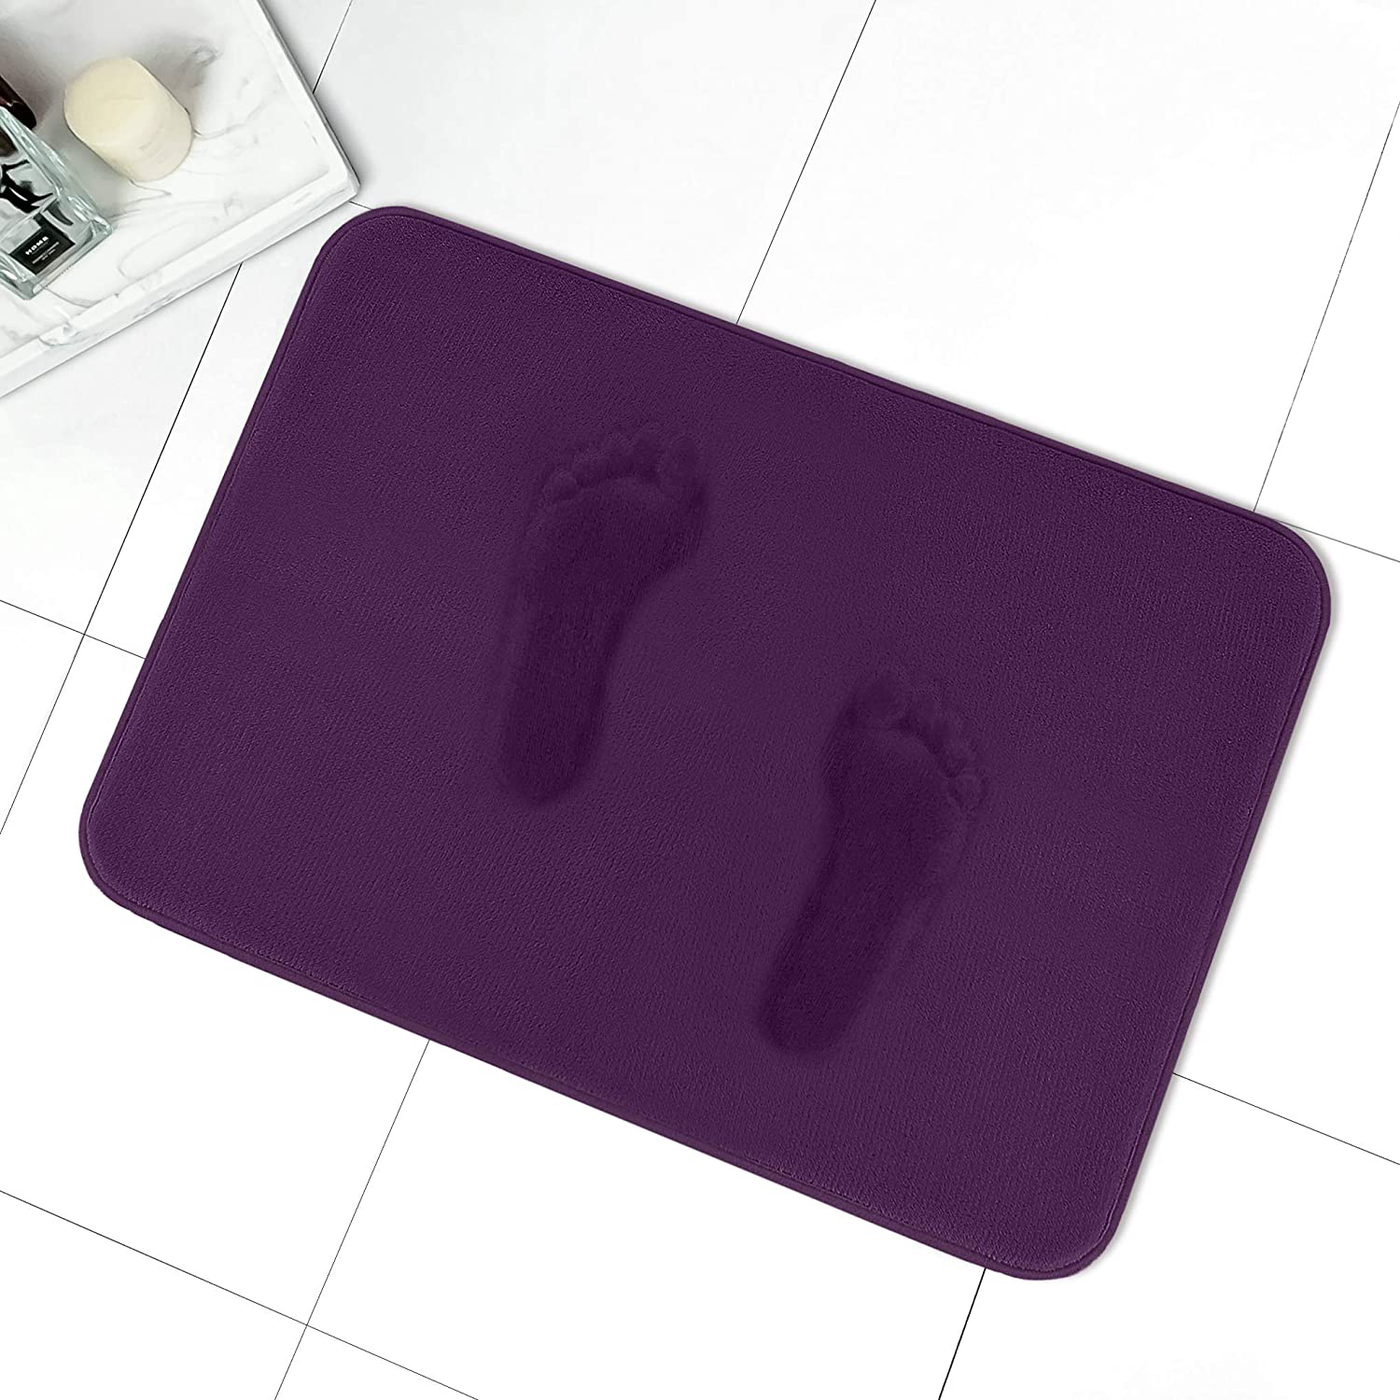 Memory Foam Bathroom Rugs Non-Slip Water Absorbent Fast Dry Luxury Soft Bath mat